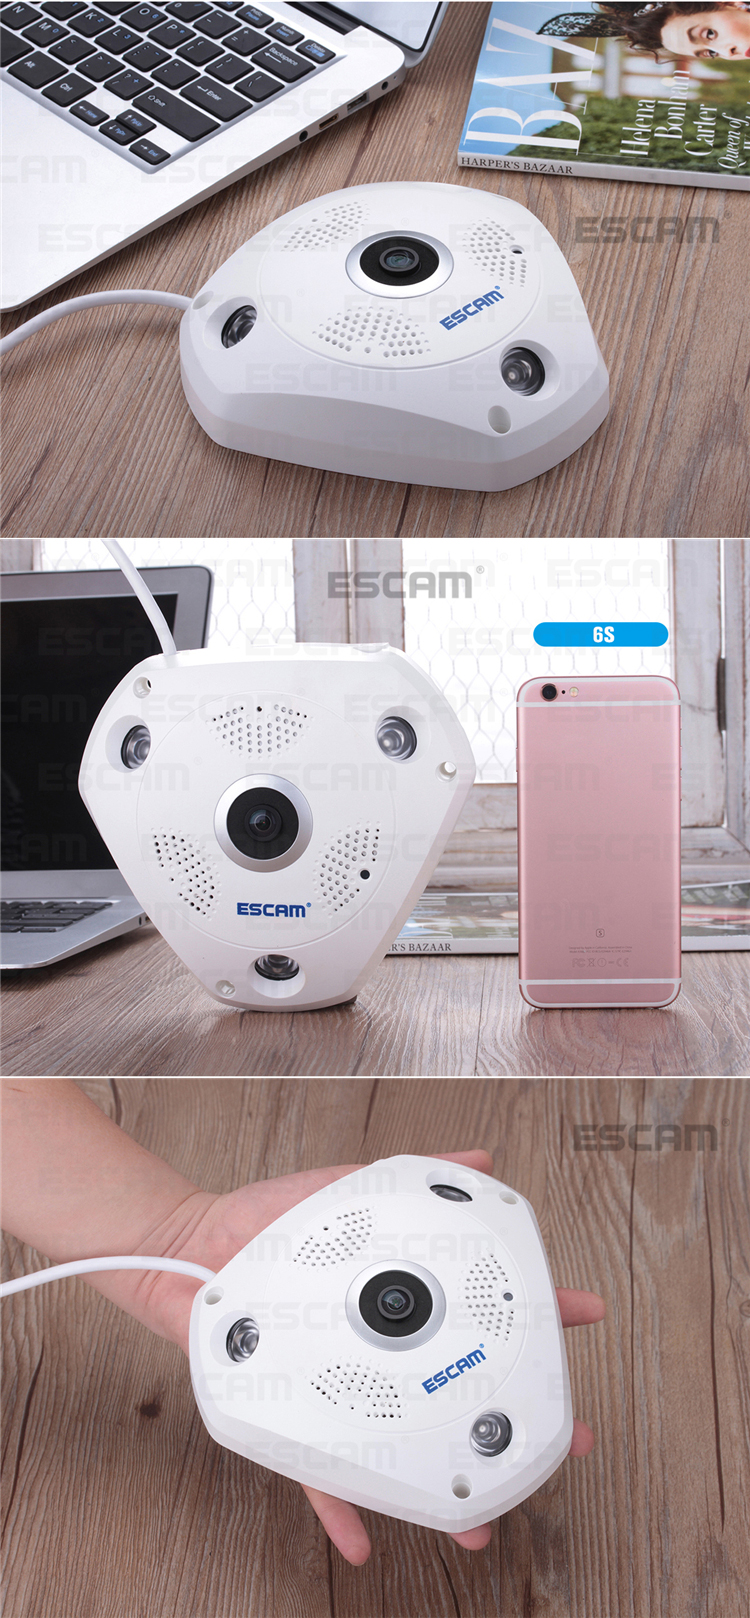 ESCAM Fisheye Camera Support VR QP180 Shark 960P IP WiFi Camera 1.3MP 360 Degree Panoramic Infrared Night Vision Camera 138